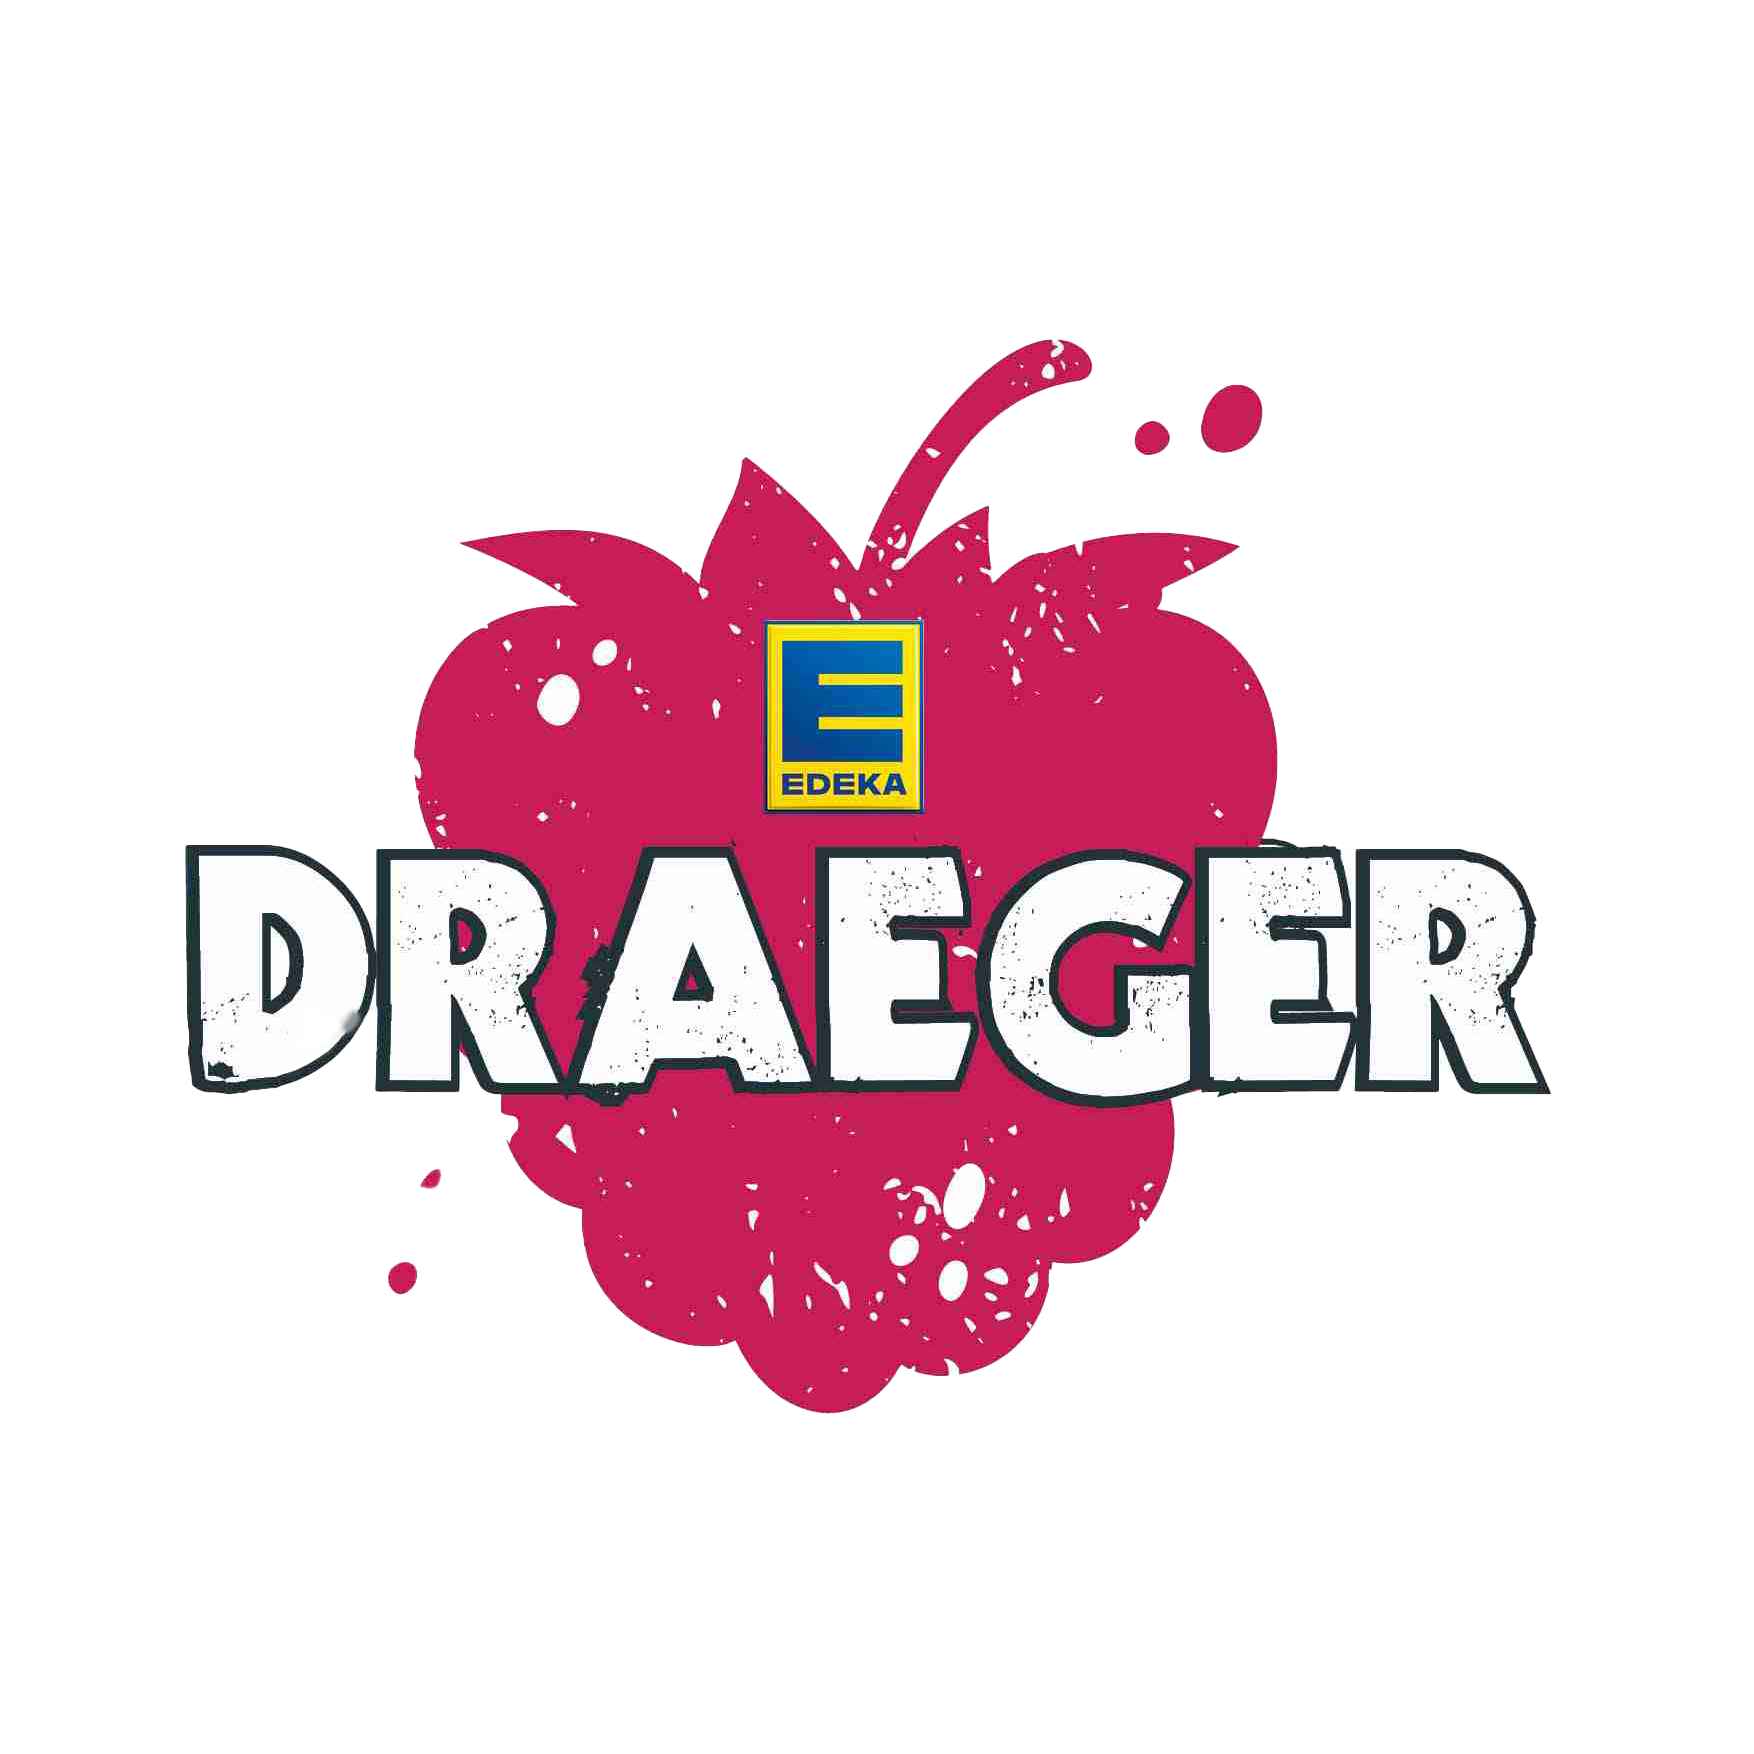 EDEKA Draeger in Uelzen in Uelzen - Logo